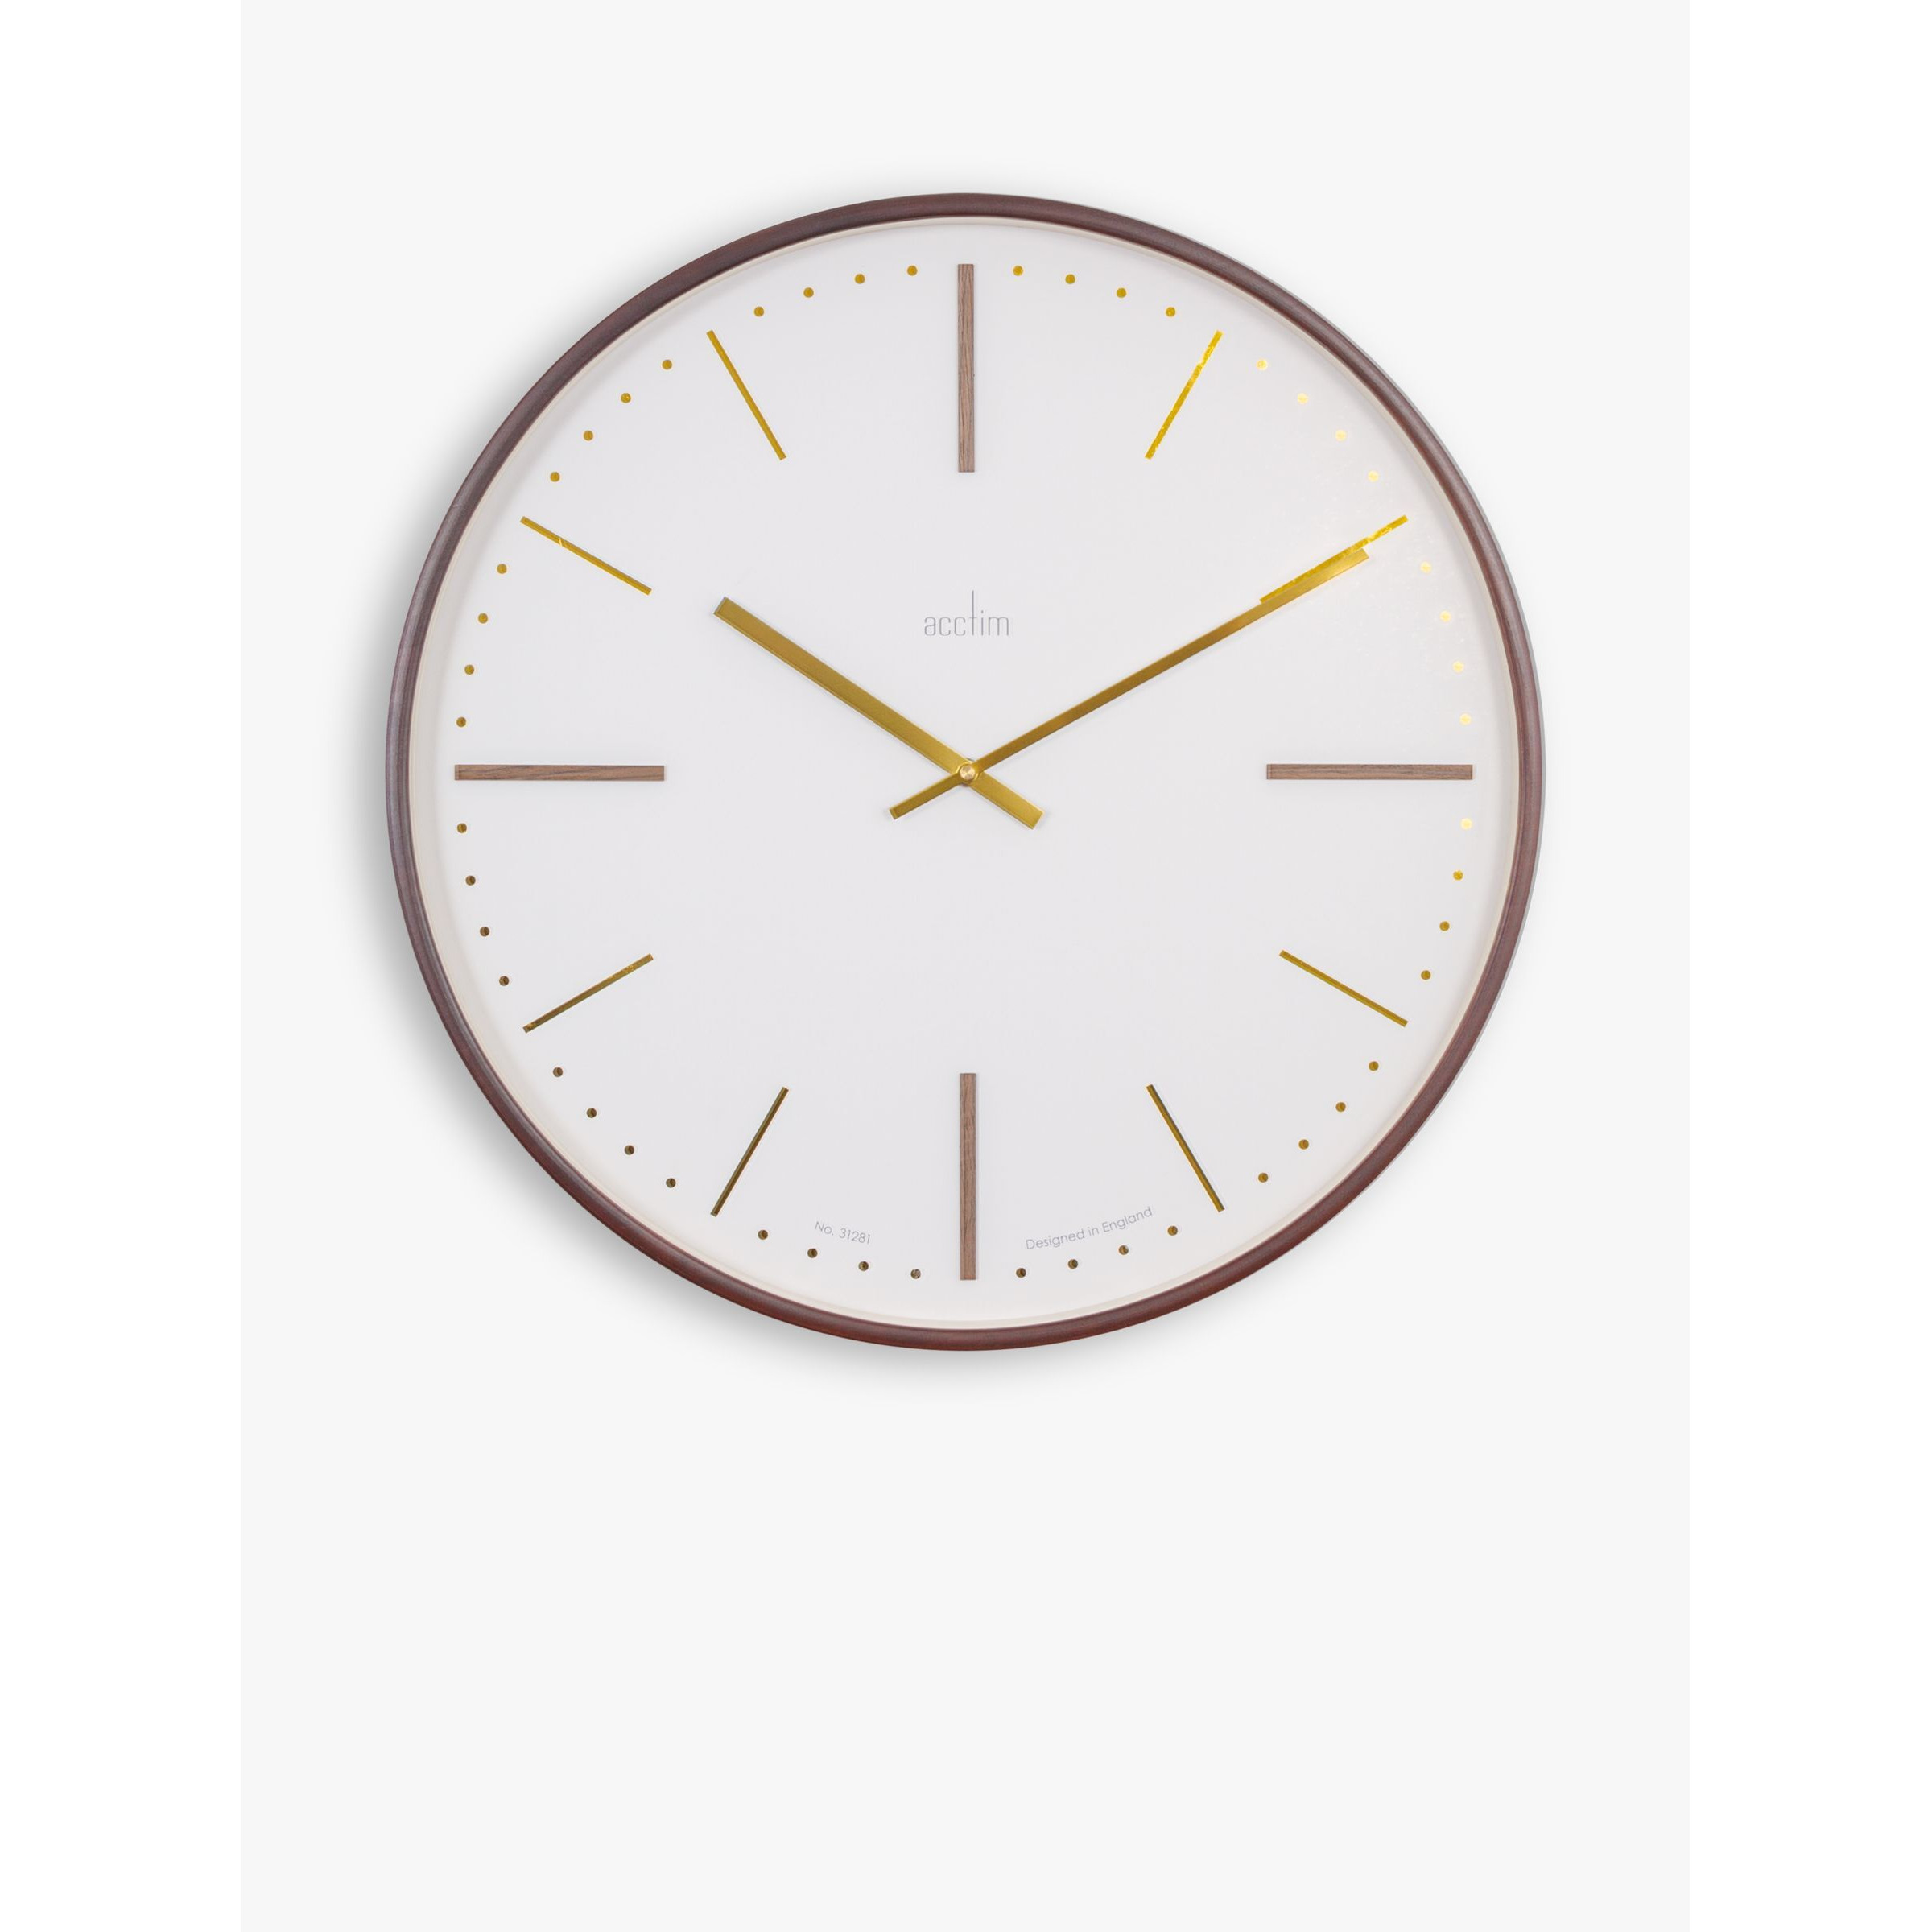 Acctim Knoll Oak Wood Frame Analogue Quartz Wall Clock, 53cm, Natural - image 1